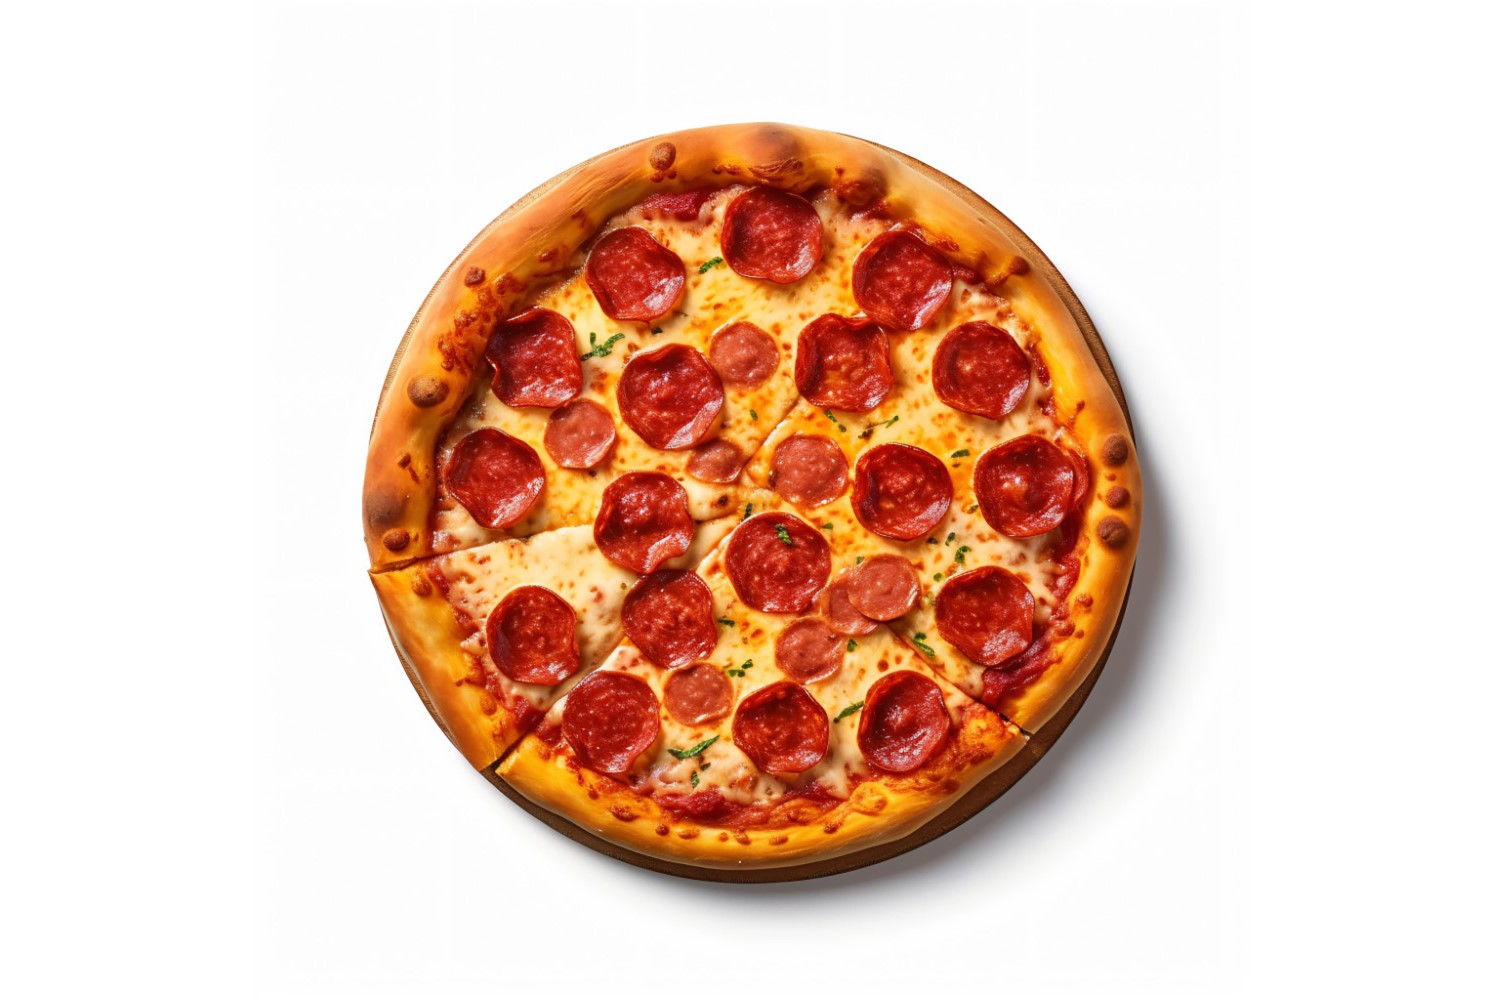 Pepperoni Pizza On white background 60